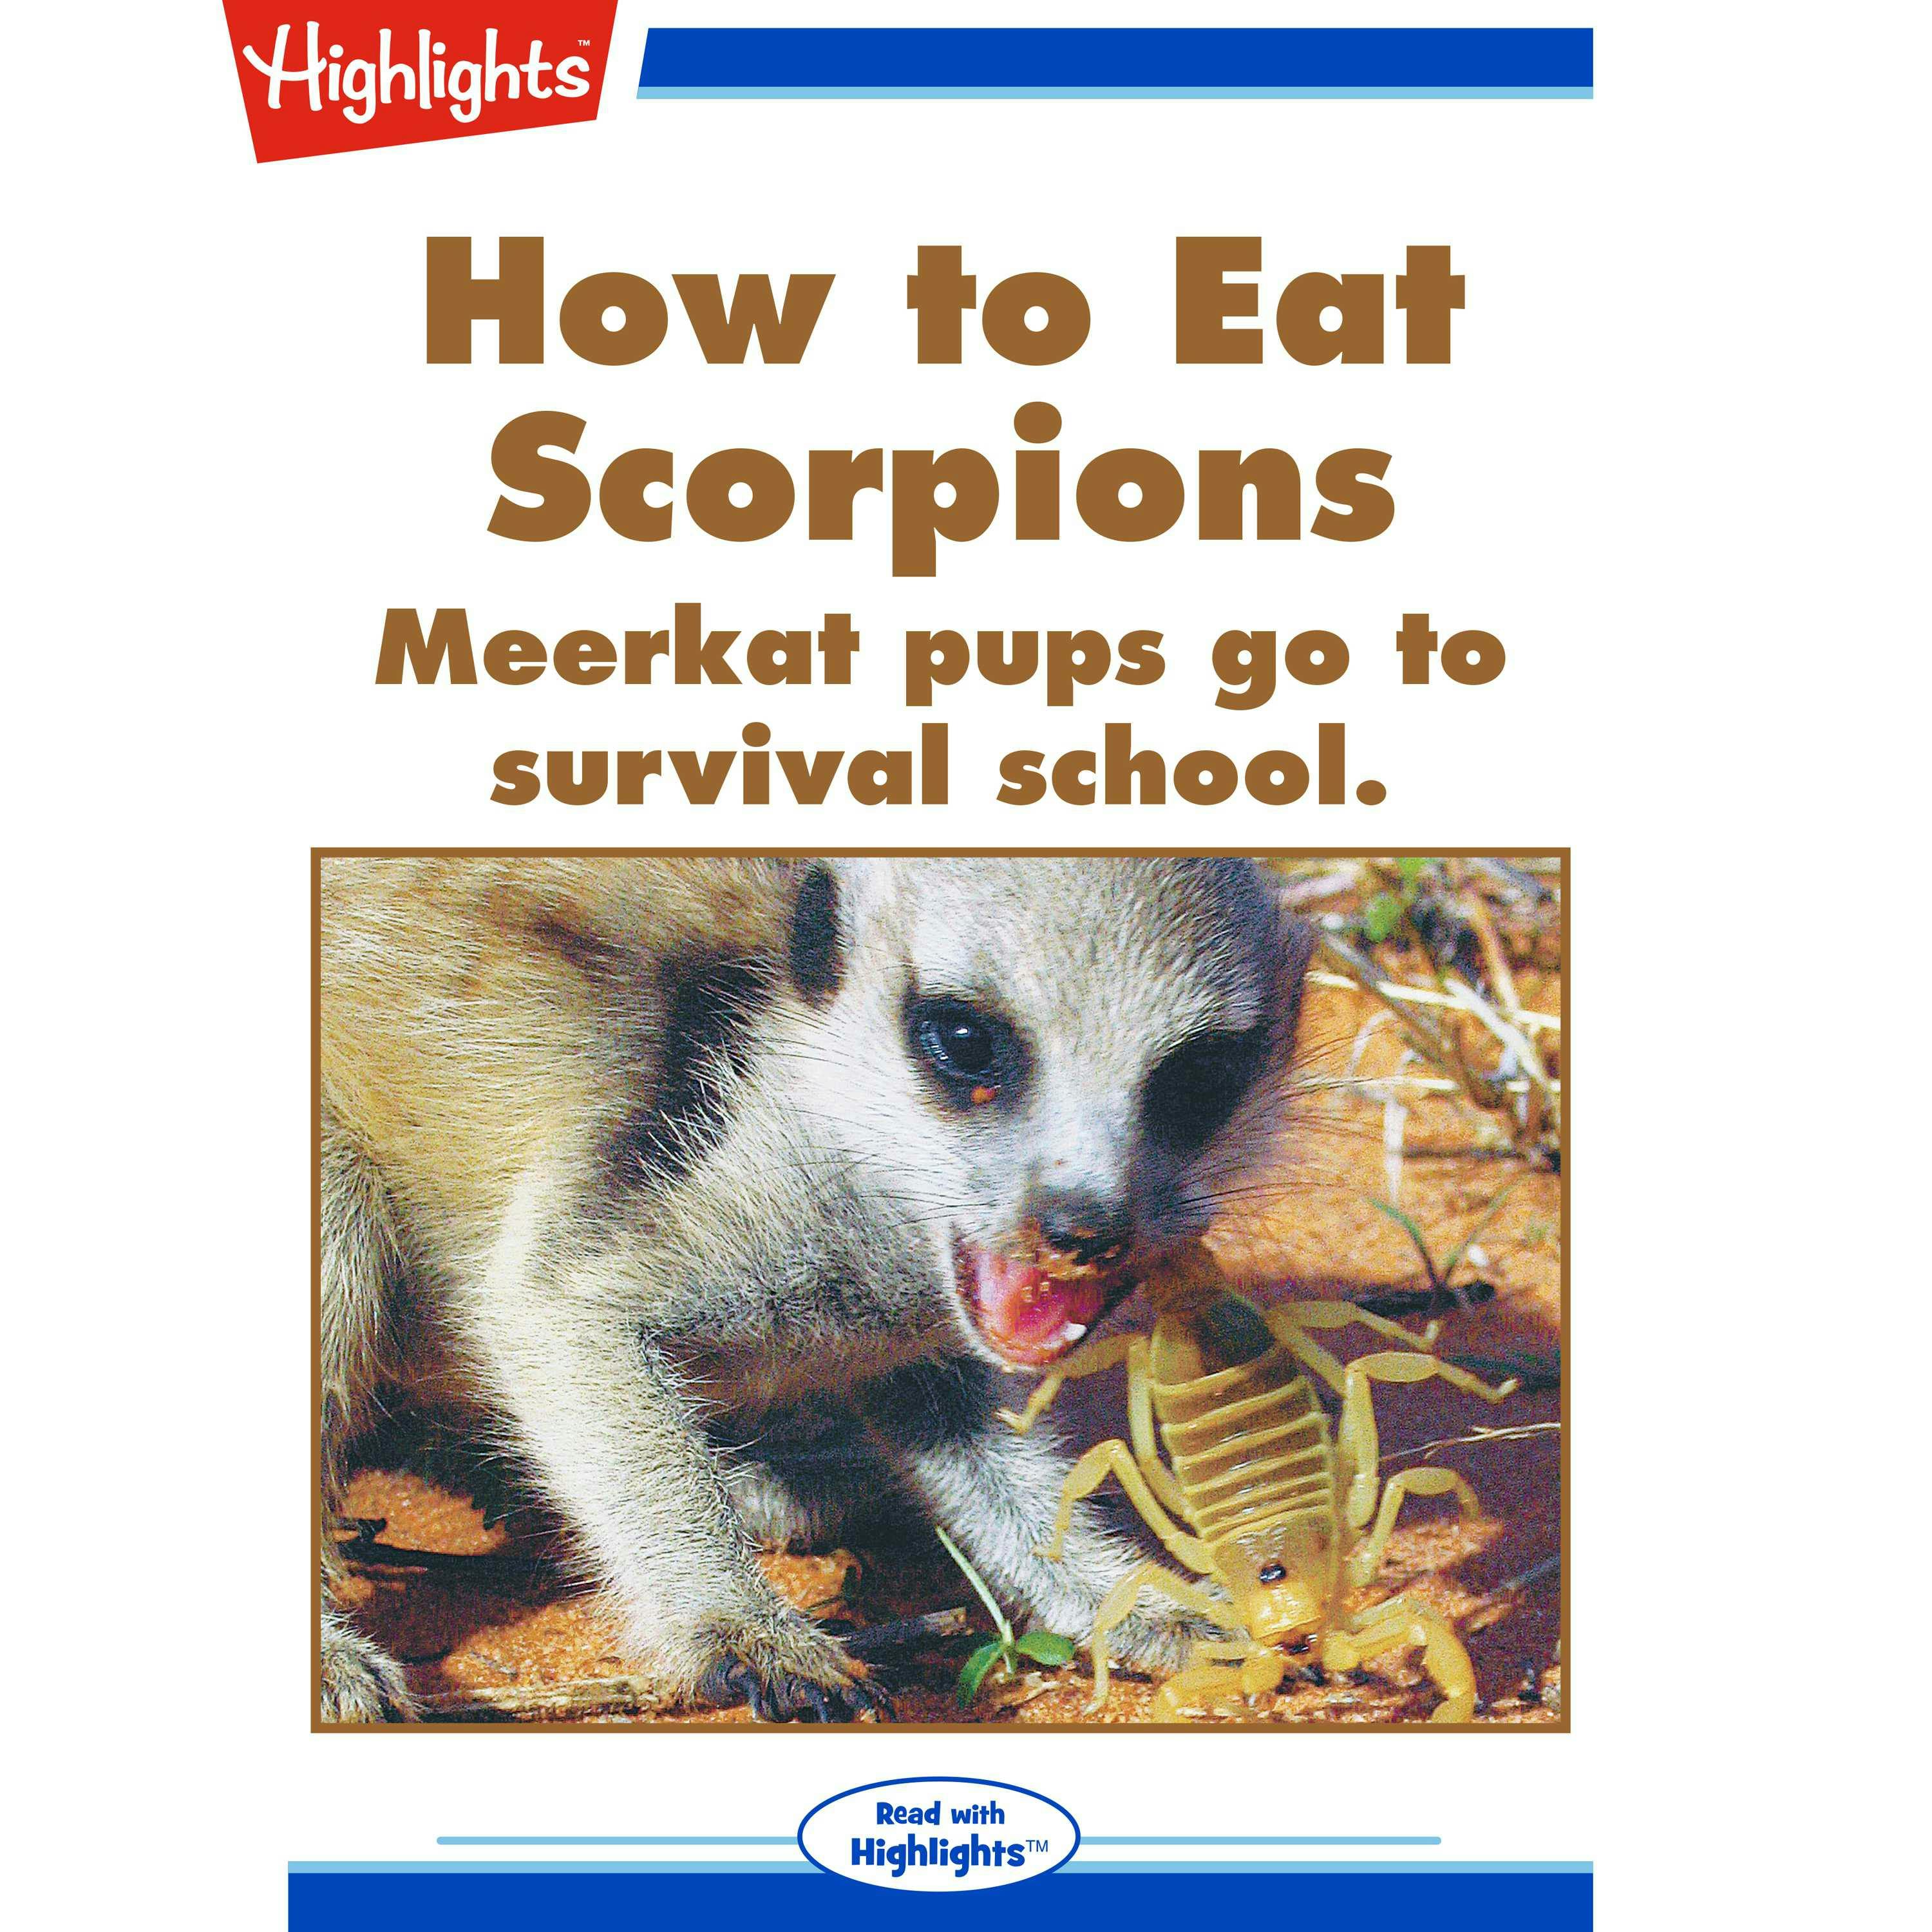 How to Eat Scorpions - Ana Maria Rodriguez, Ph.D.